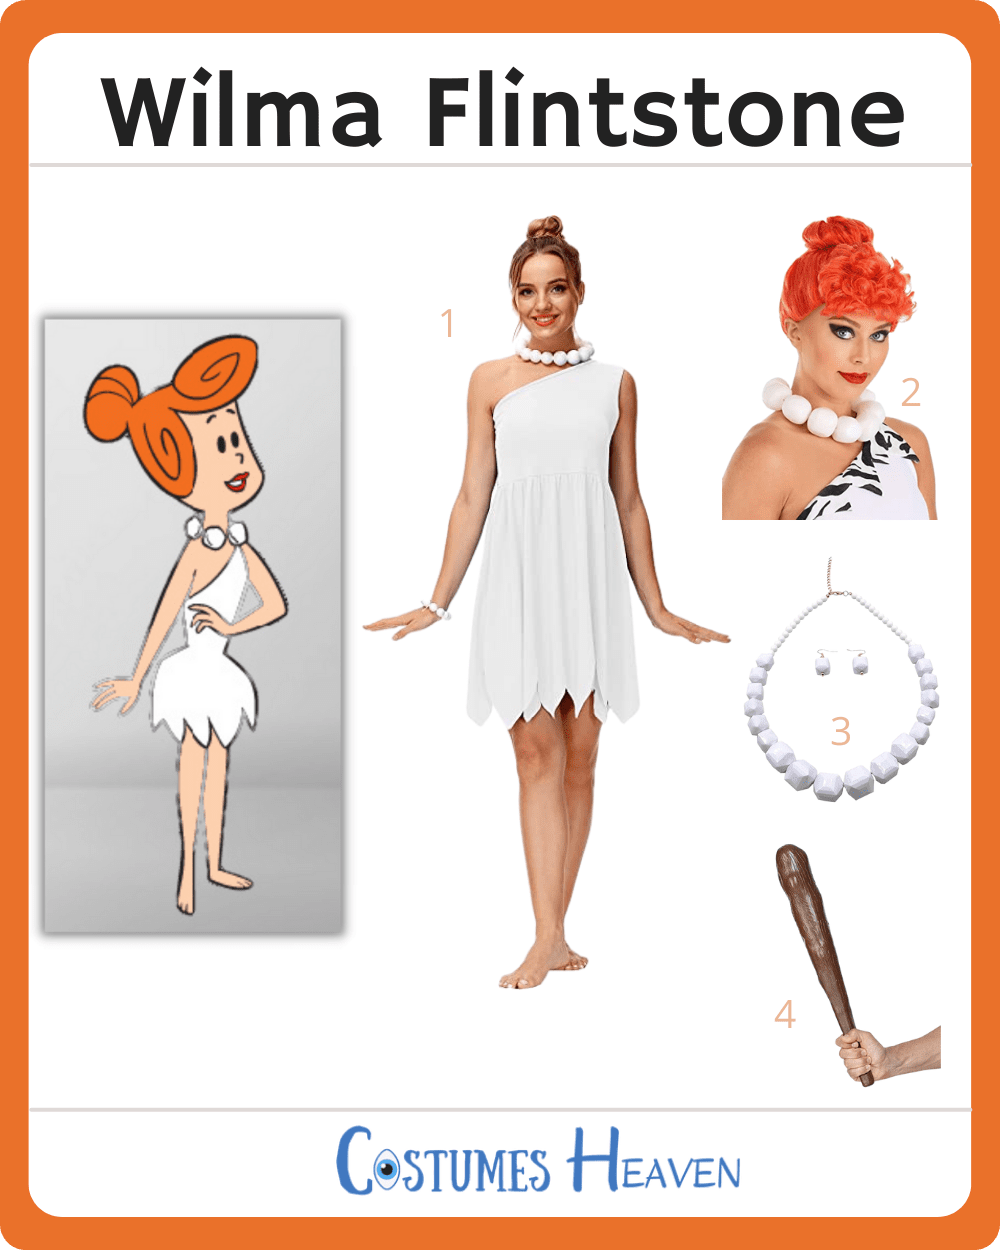 wilma flintstone costume